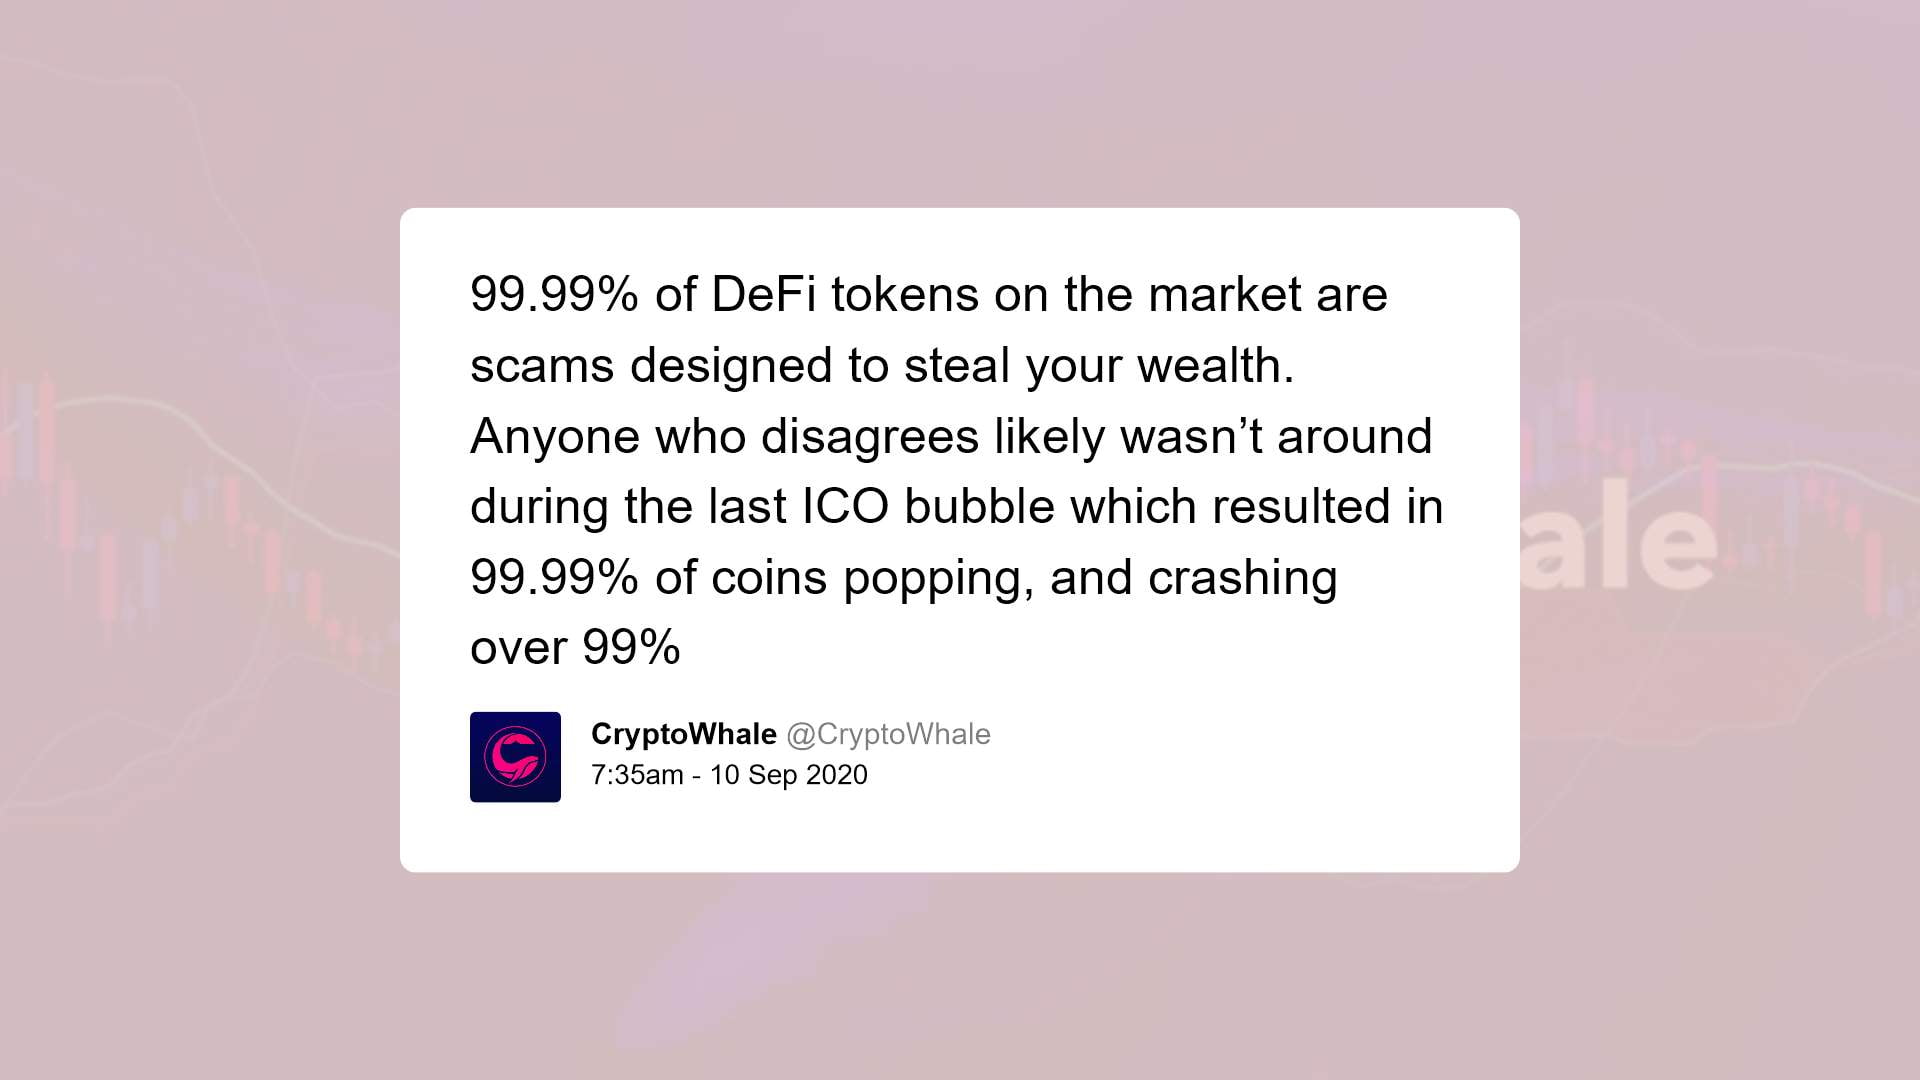 @CryptoWhale admonishing of DeFi scams